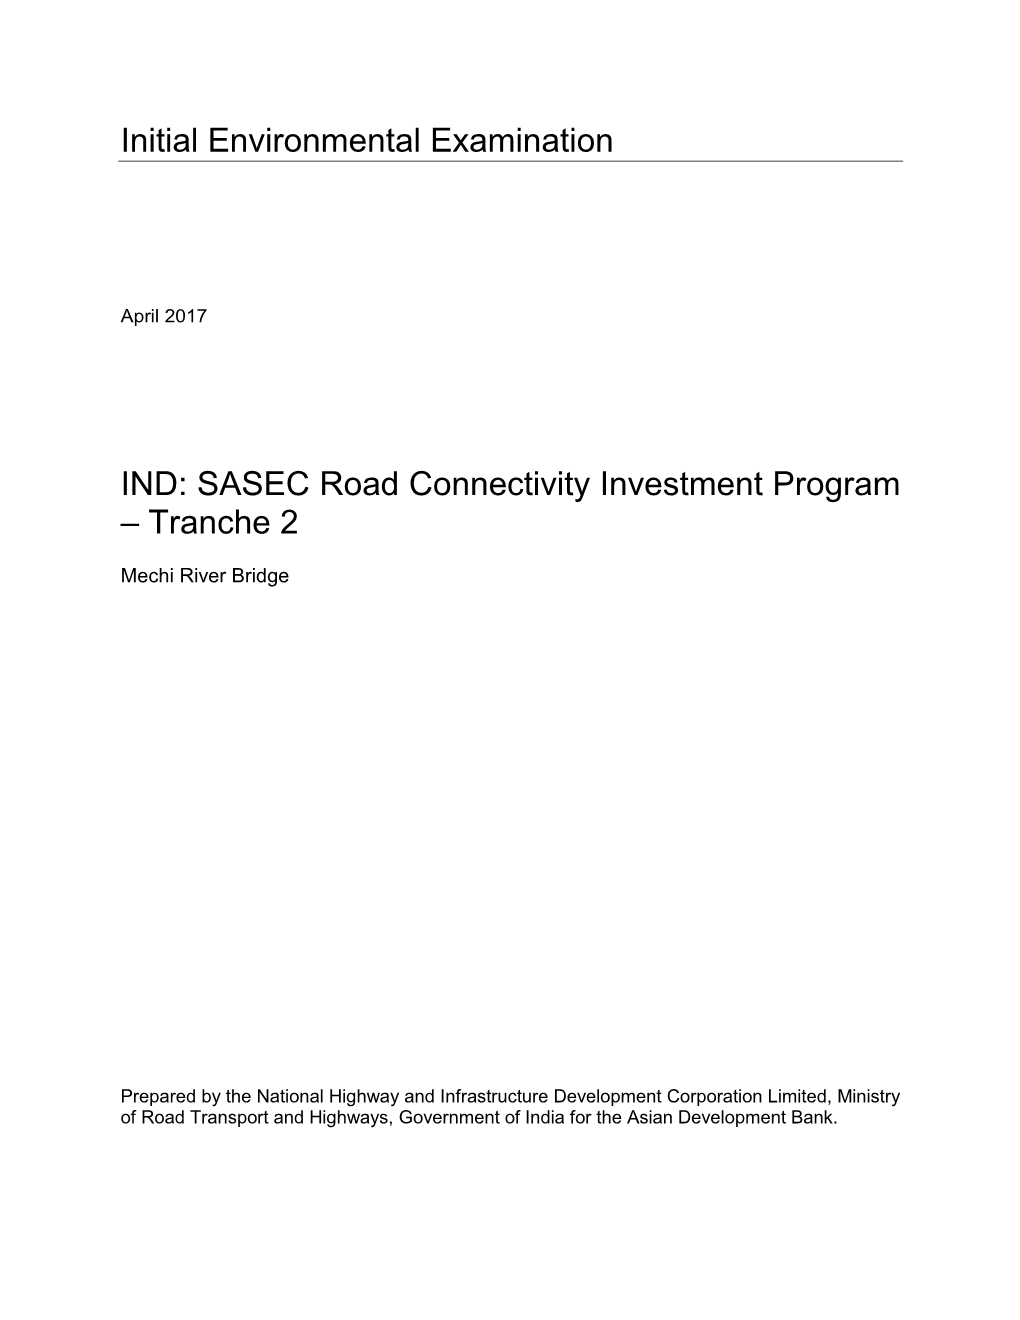 Initial Environmental Examination IND: SASEC Road Connectivity